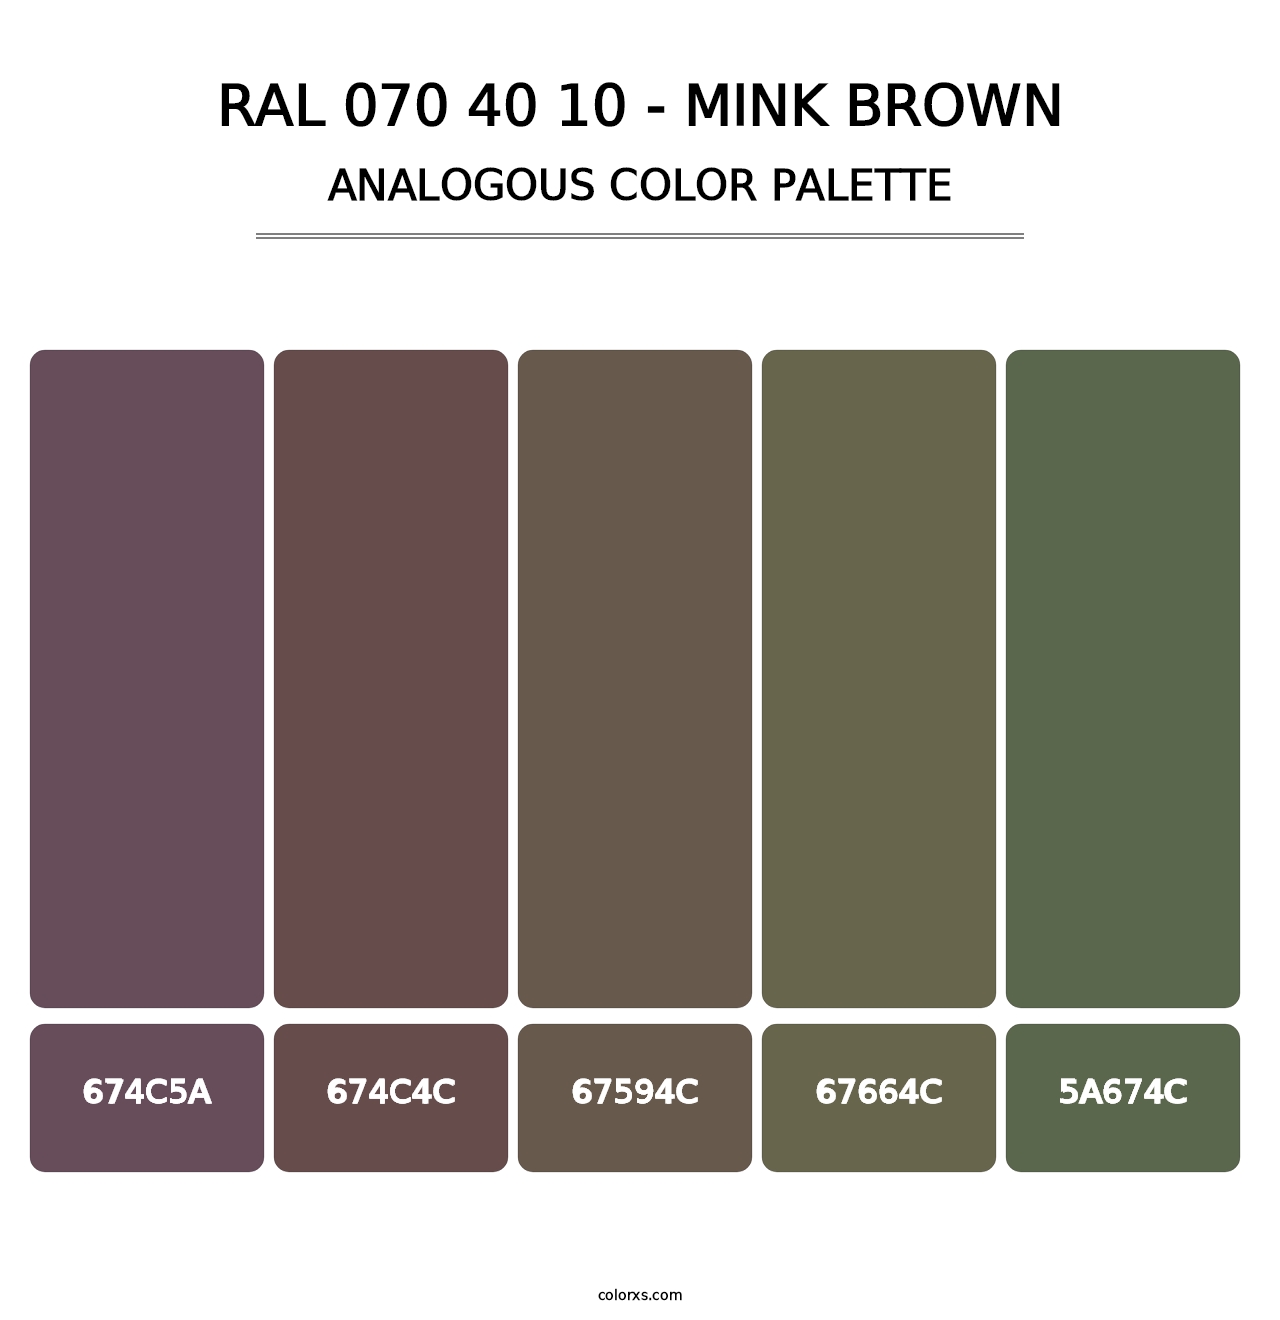 RAL 070 40 10 - Mink Brown - Analogous Color Palette